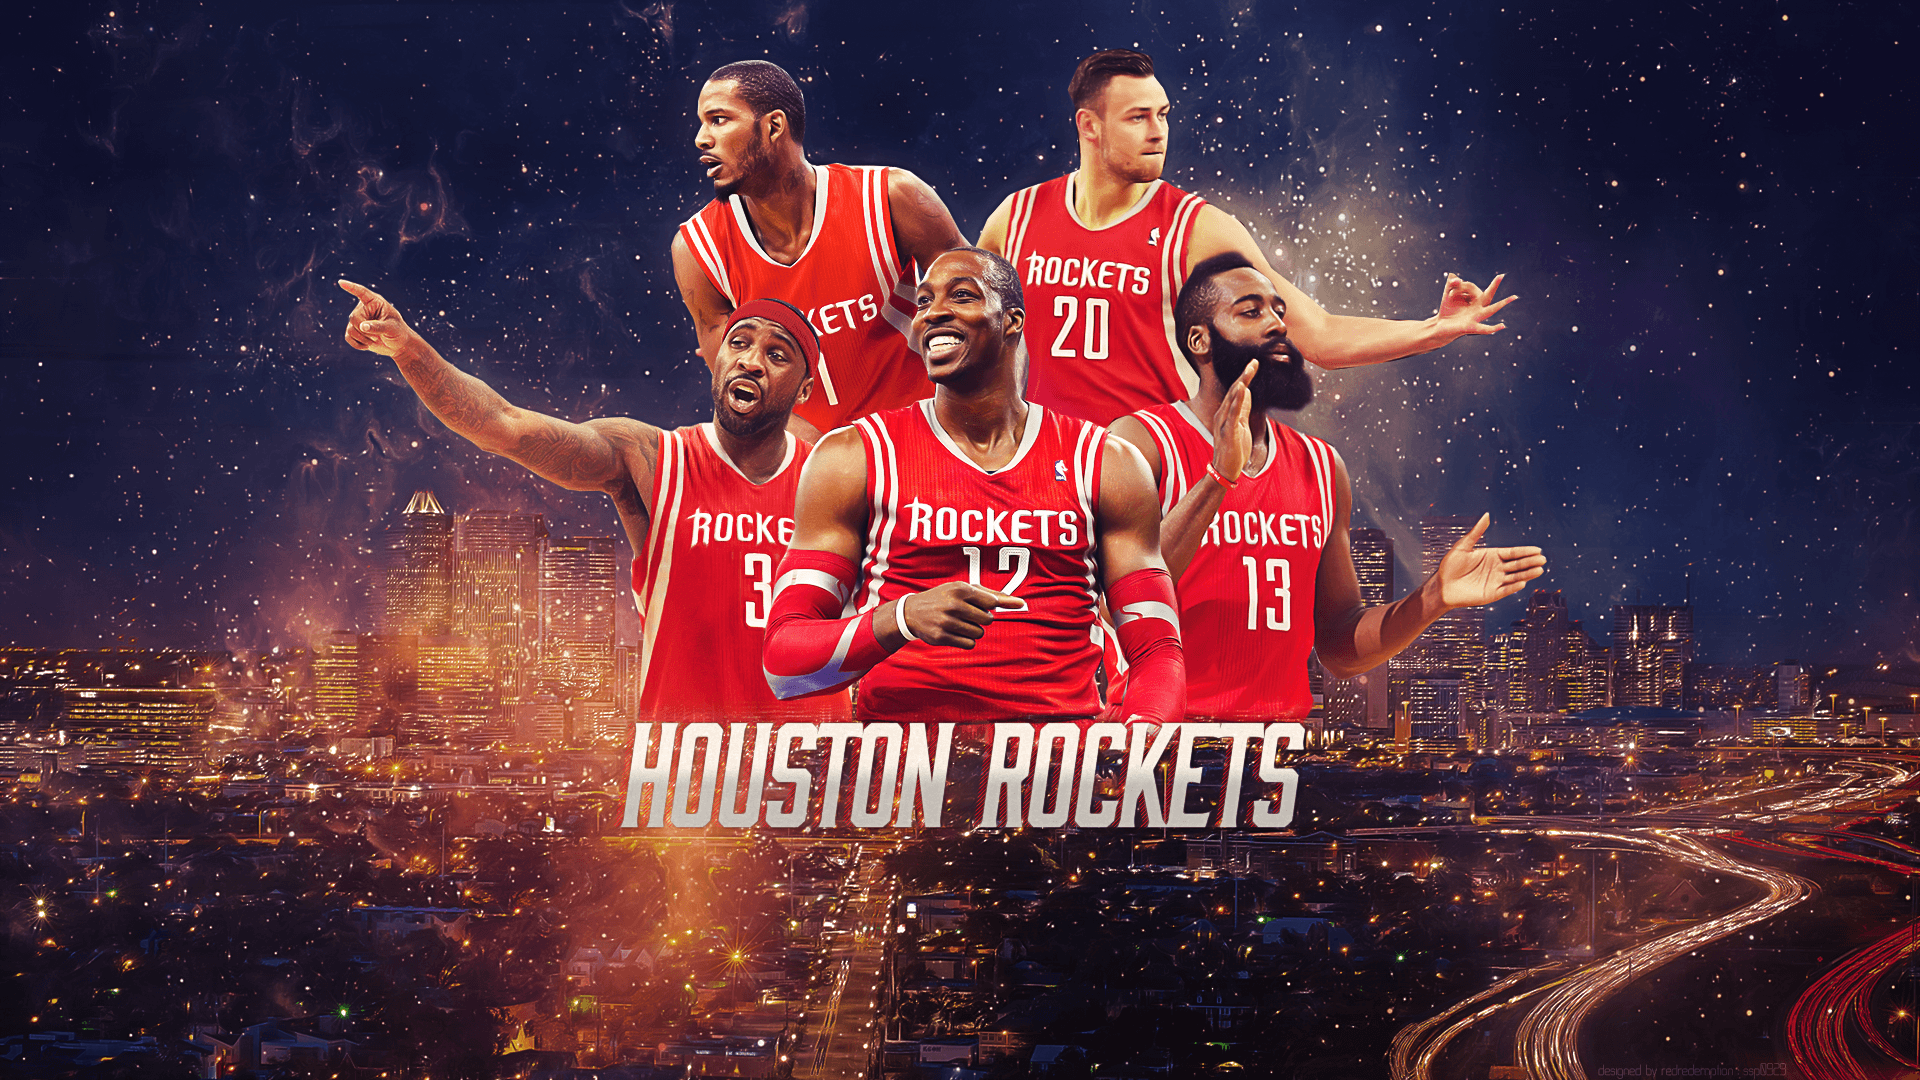 NBA Houston Rockets Team wallpaper HD 2016 in Basketball